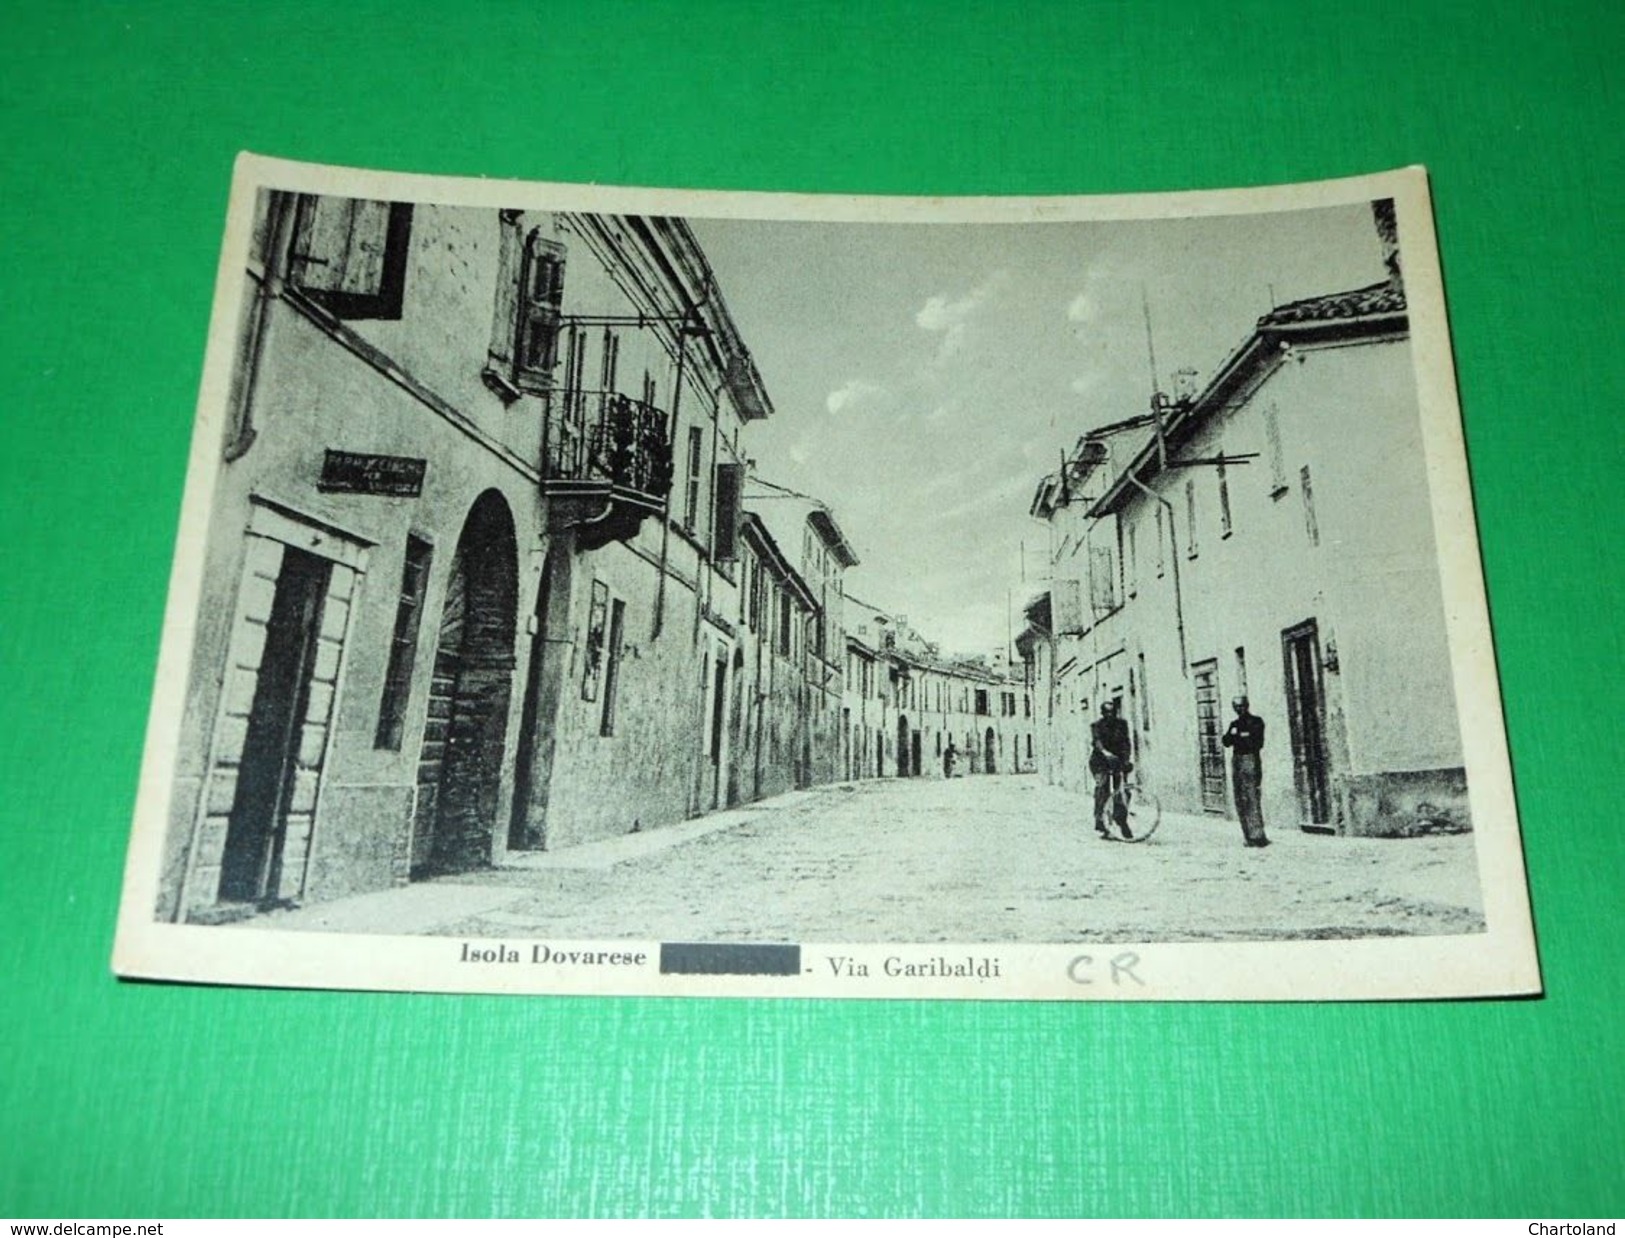 Cartolina Isola Dovarese - Via Garibaldi 1940 Ca - Cremona